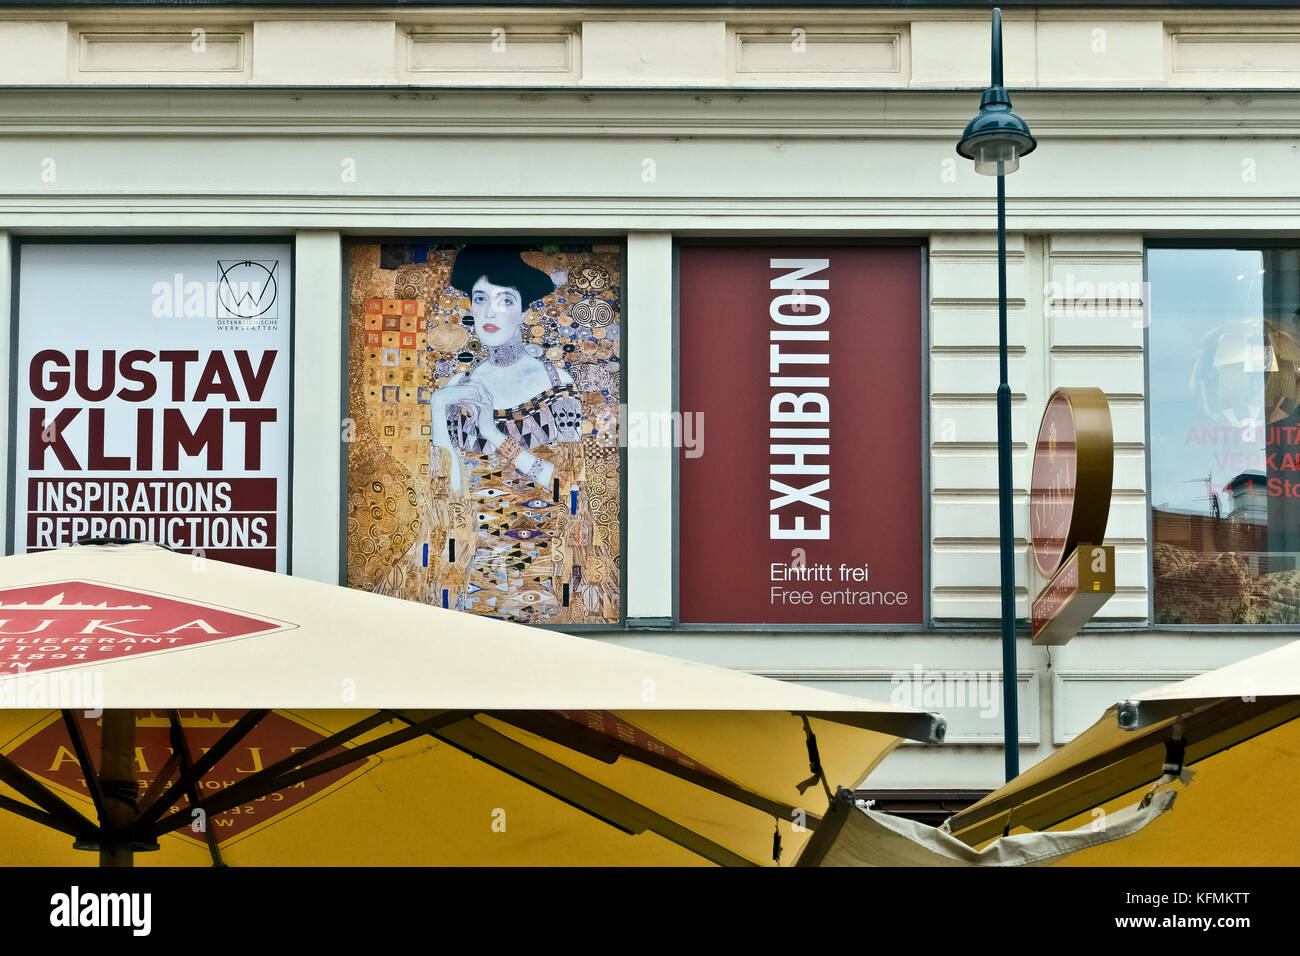 Souvenir shop, shopping, exhibition of Gustav Klimt reproductions at Kärntner Str. Wien, Vienna, Austria, Europe, EU. Big umbrellas in the foreground. Stock Photo